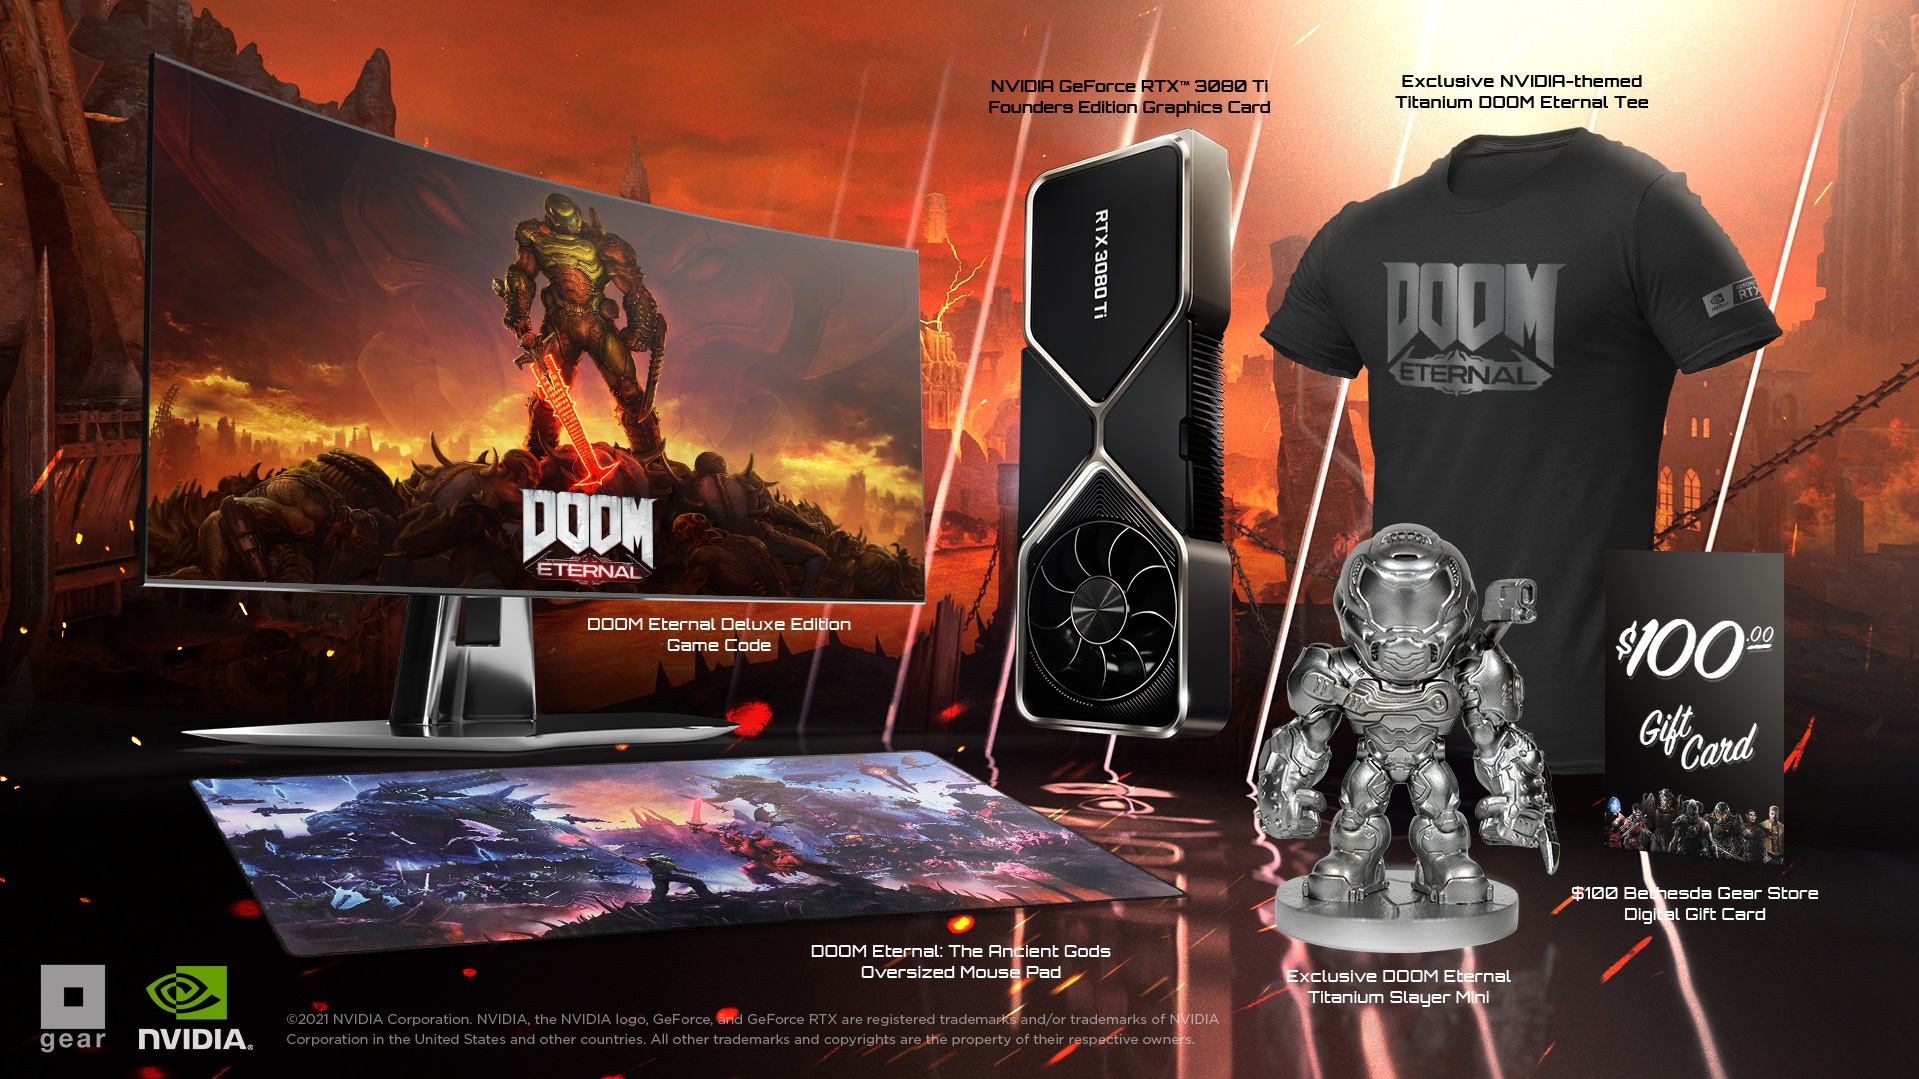 DOOM Eternal Doom Slayer Figure – Official Bethesda Gear Store